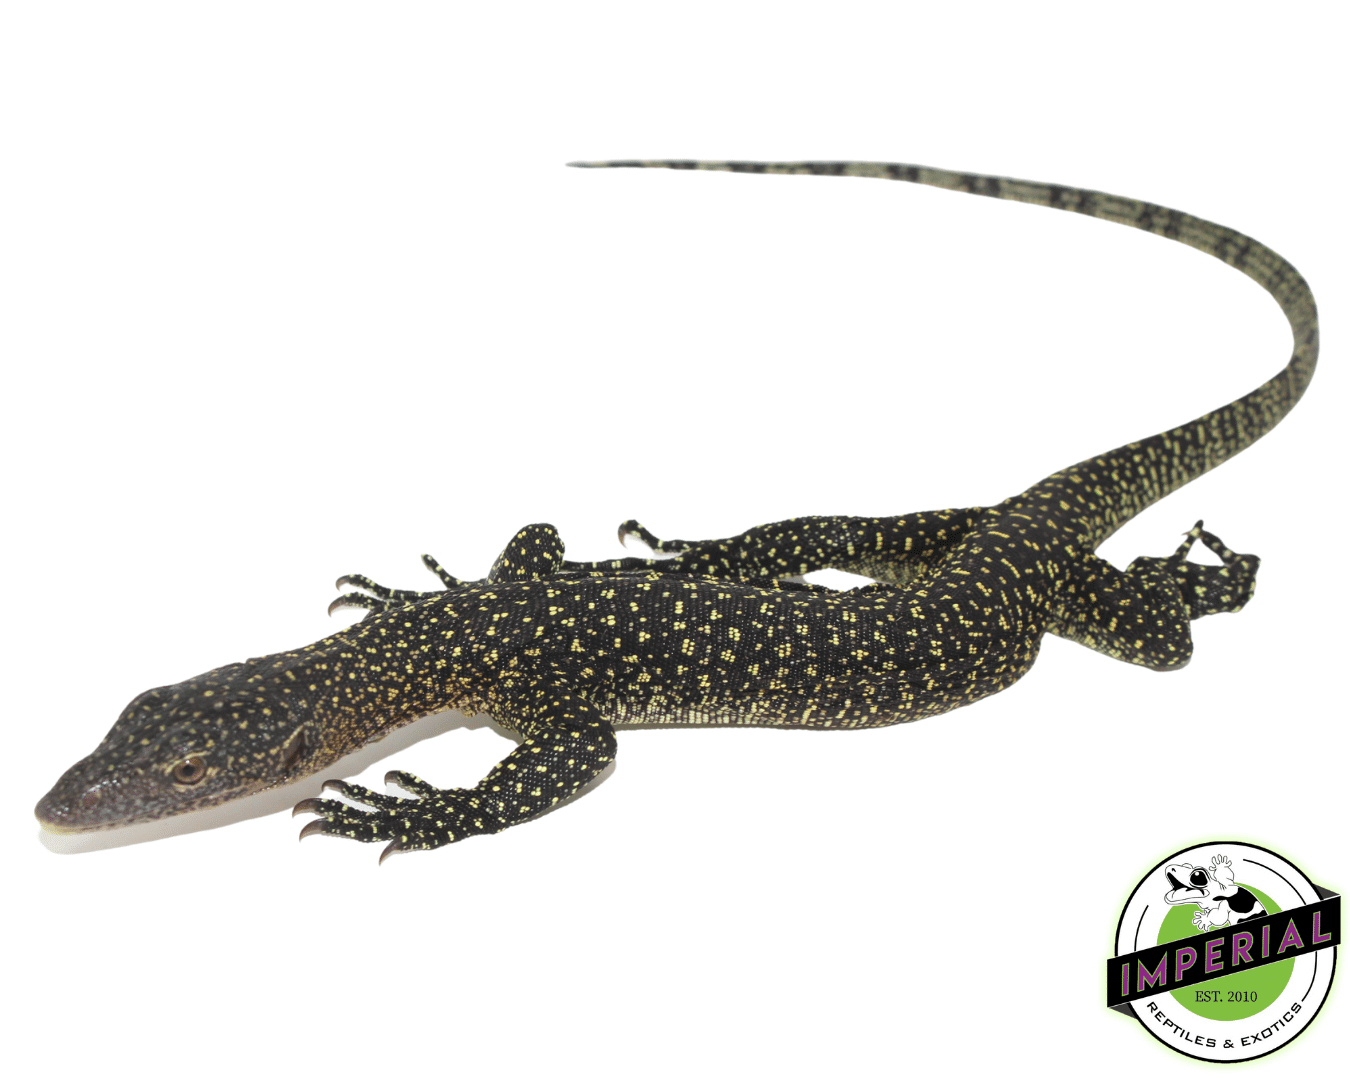 mangrove monitor lizard for sale, buy reptiles online